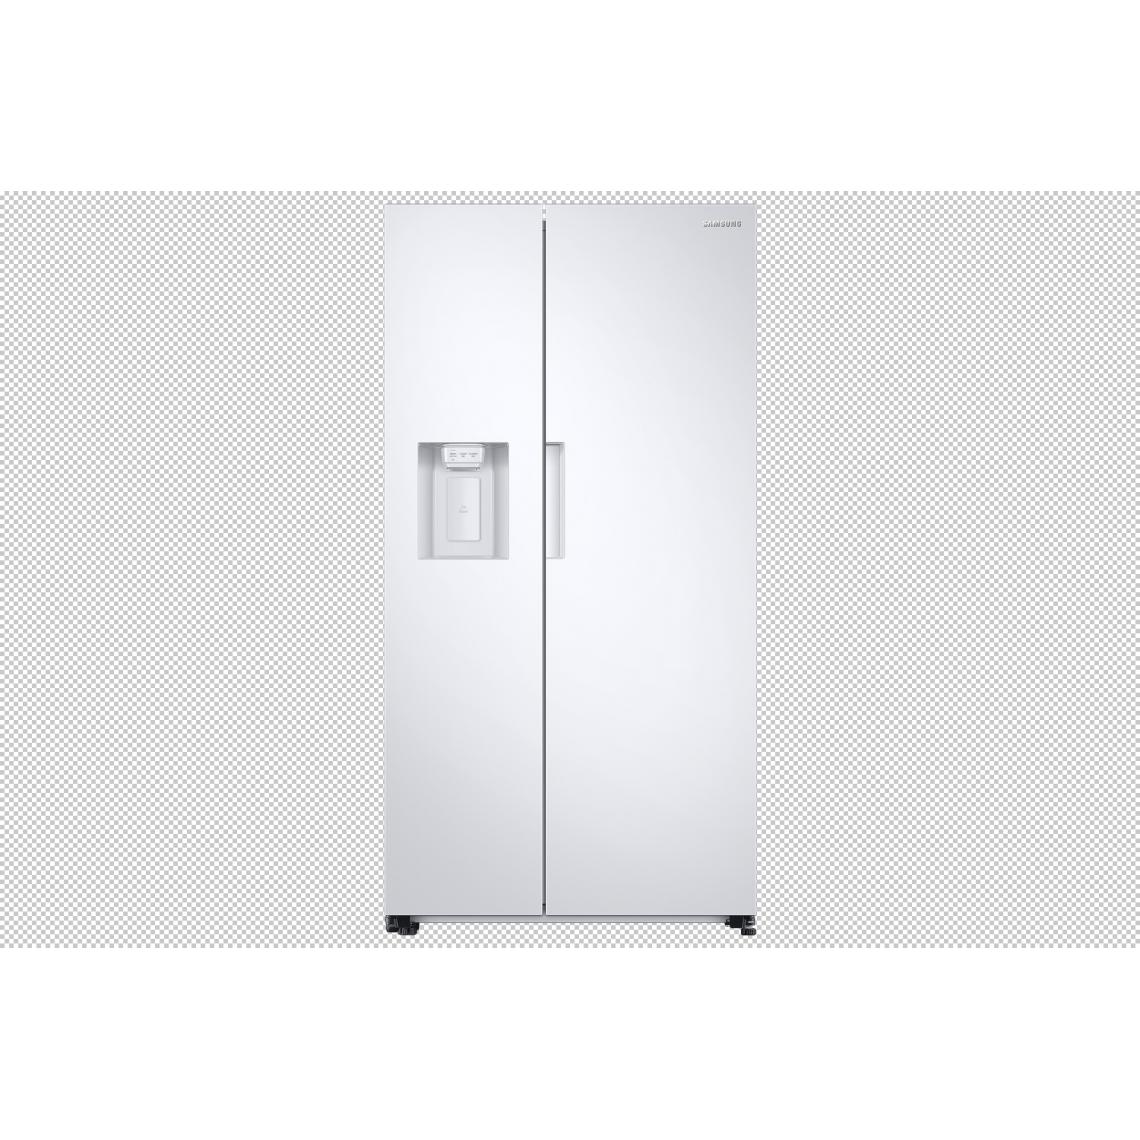 Samsung - Refrigerateur americain Samsung RS67A8810WW - Réfrigérateur américain